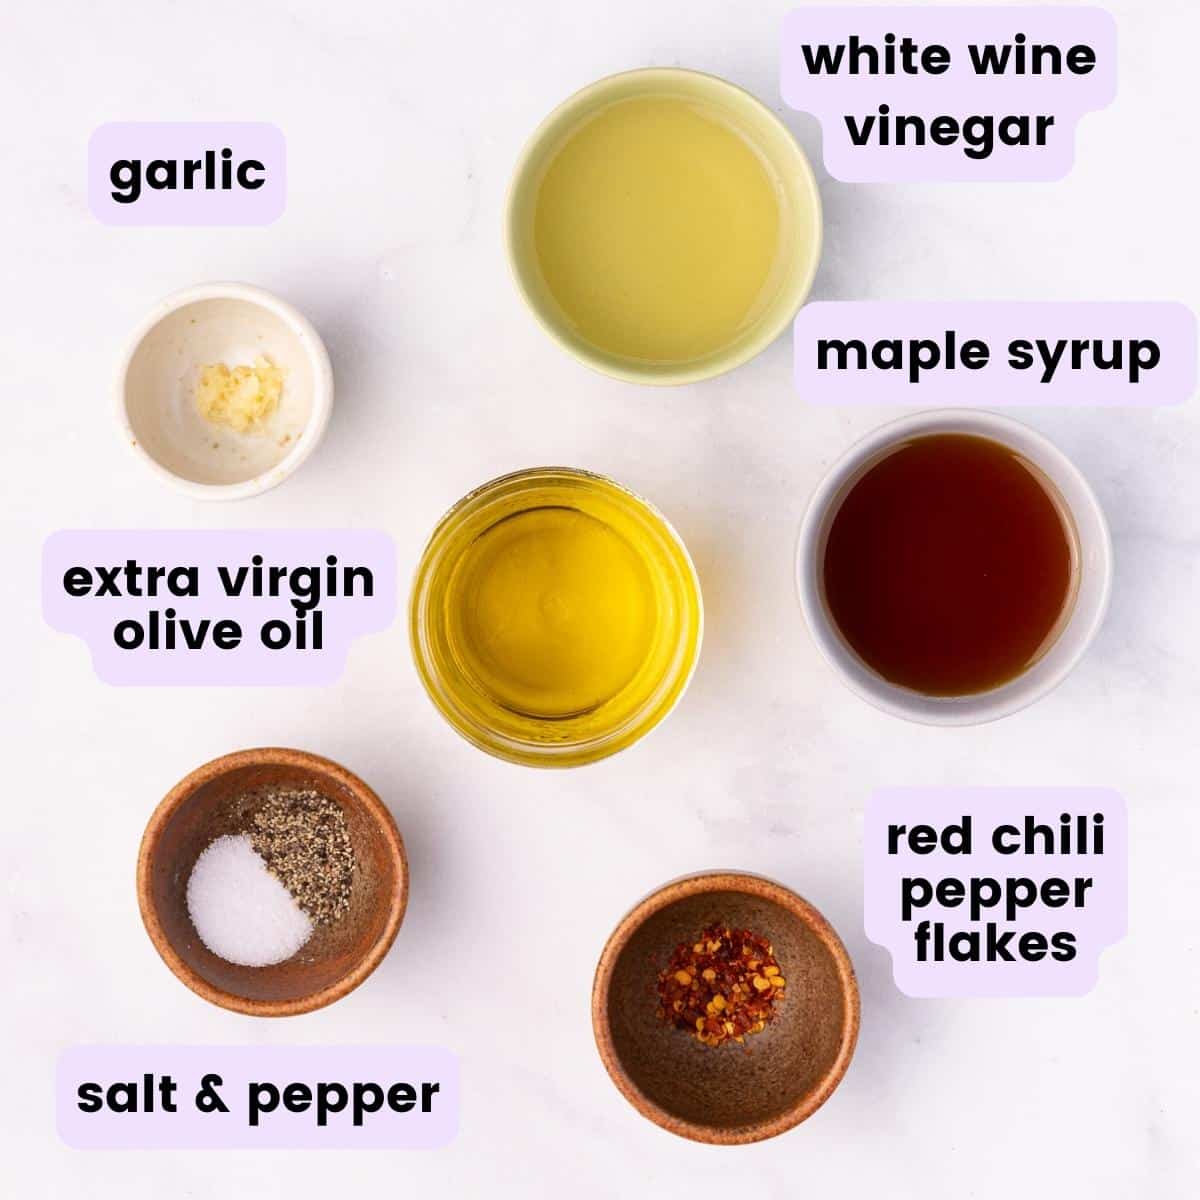 the vinaigrette ingredients: white wine vinegar, garlic, extra virgin olive oil, maple syrup, salt & pepper, red chili pepper flakes